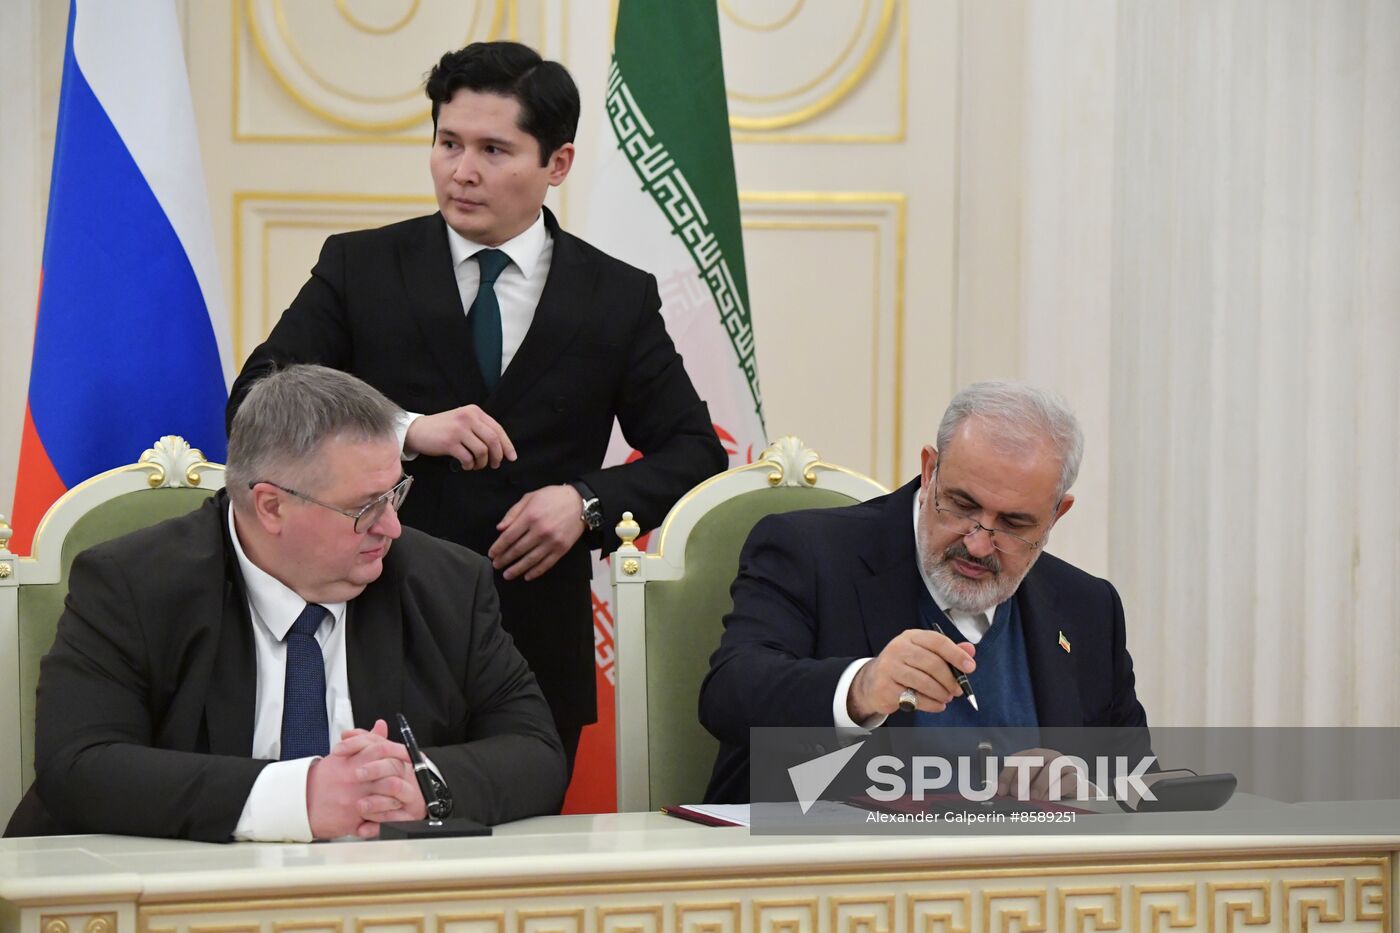 Russia EAEU Iran Trade Agreement